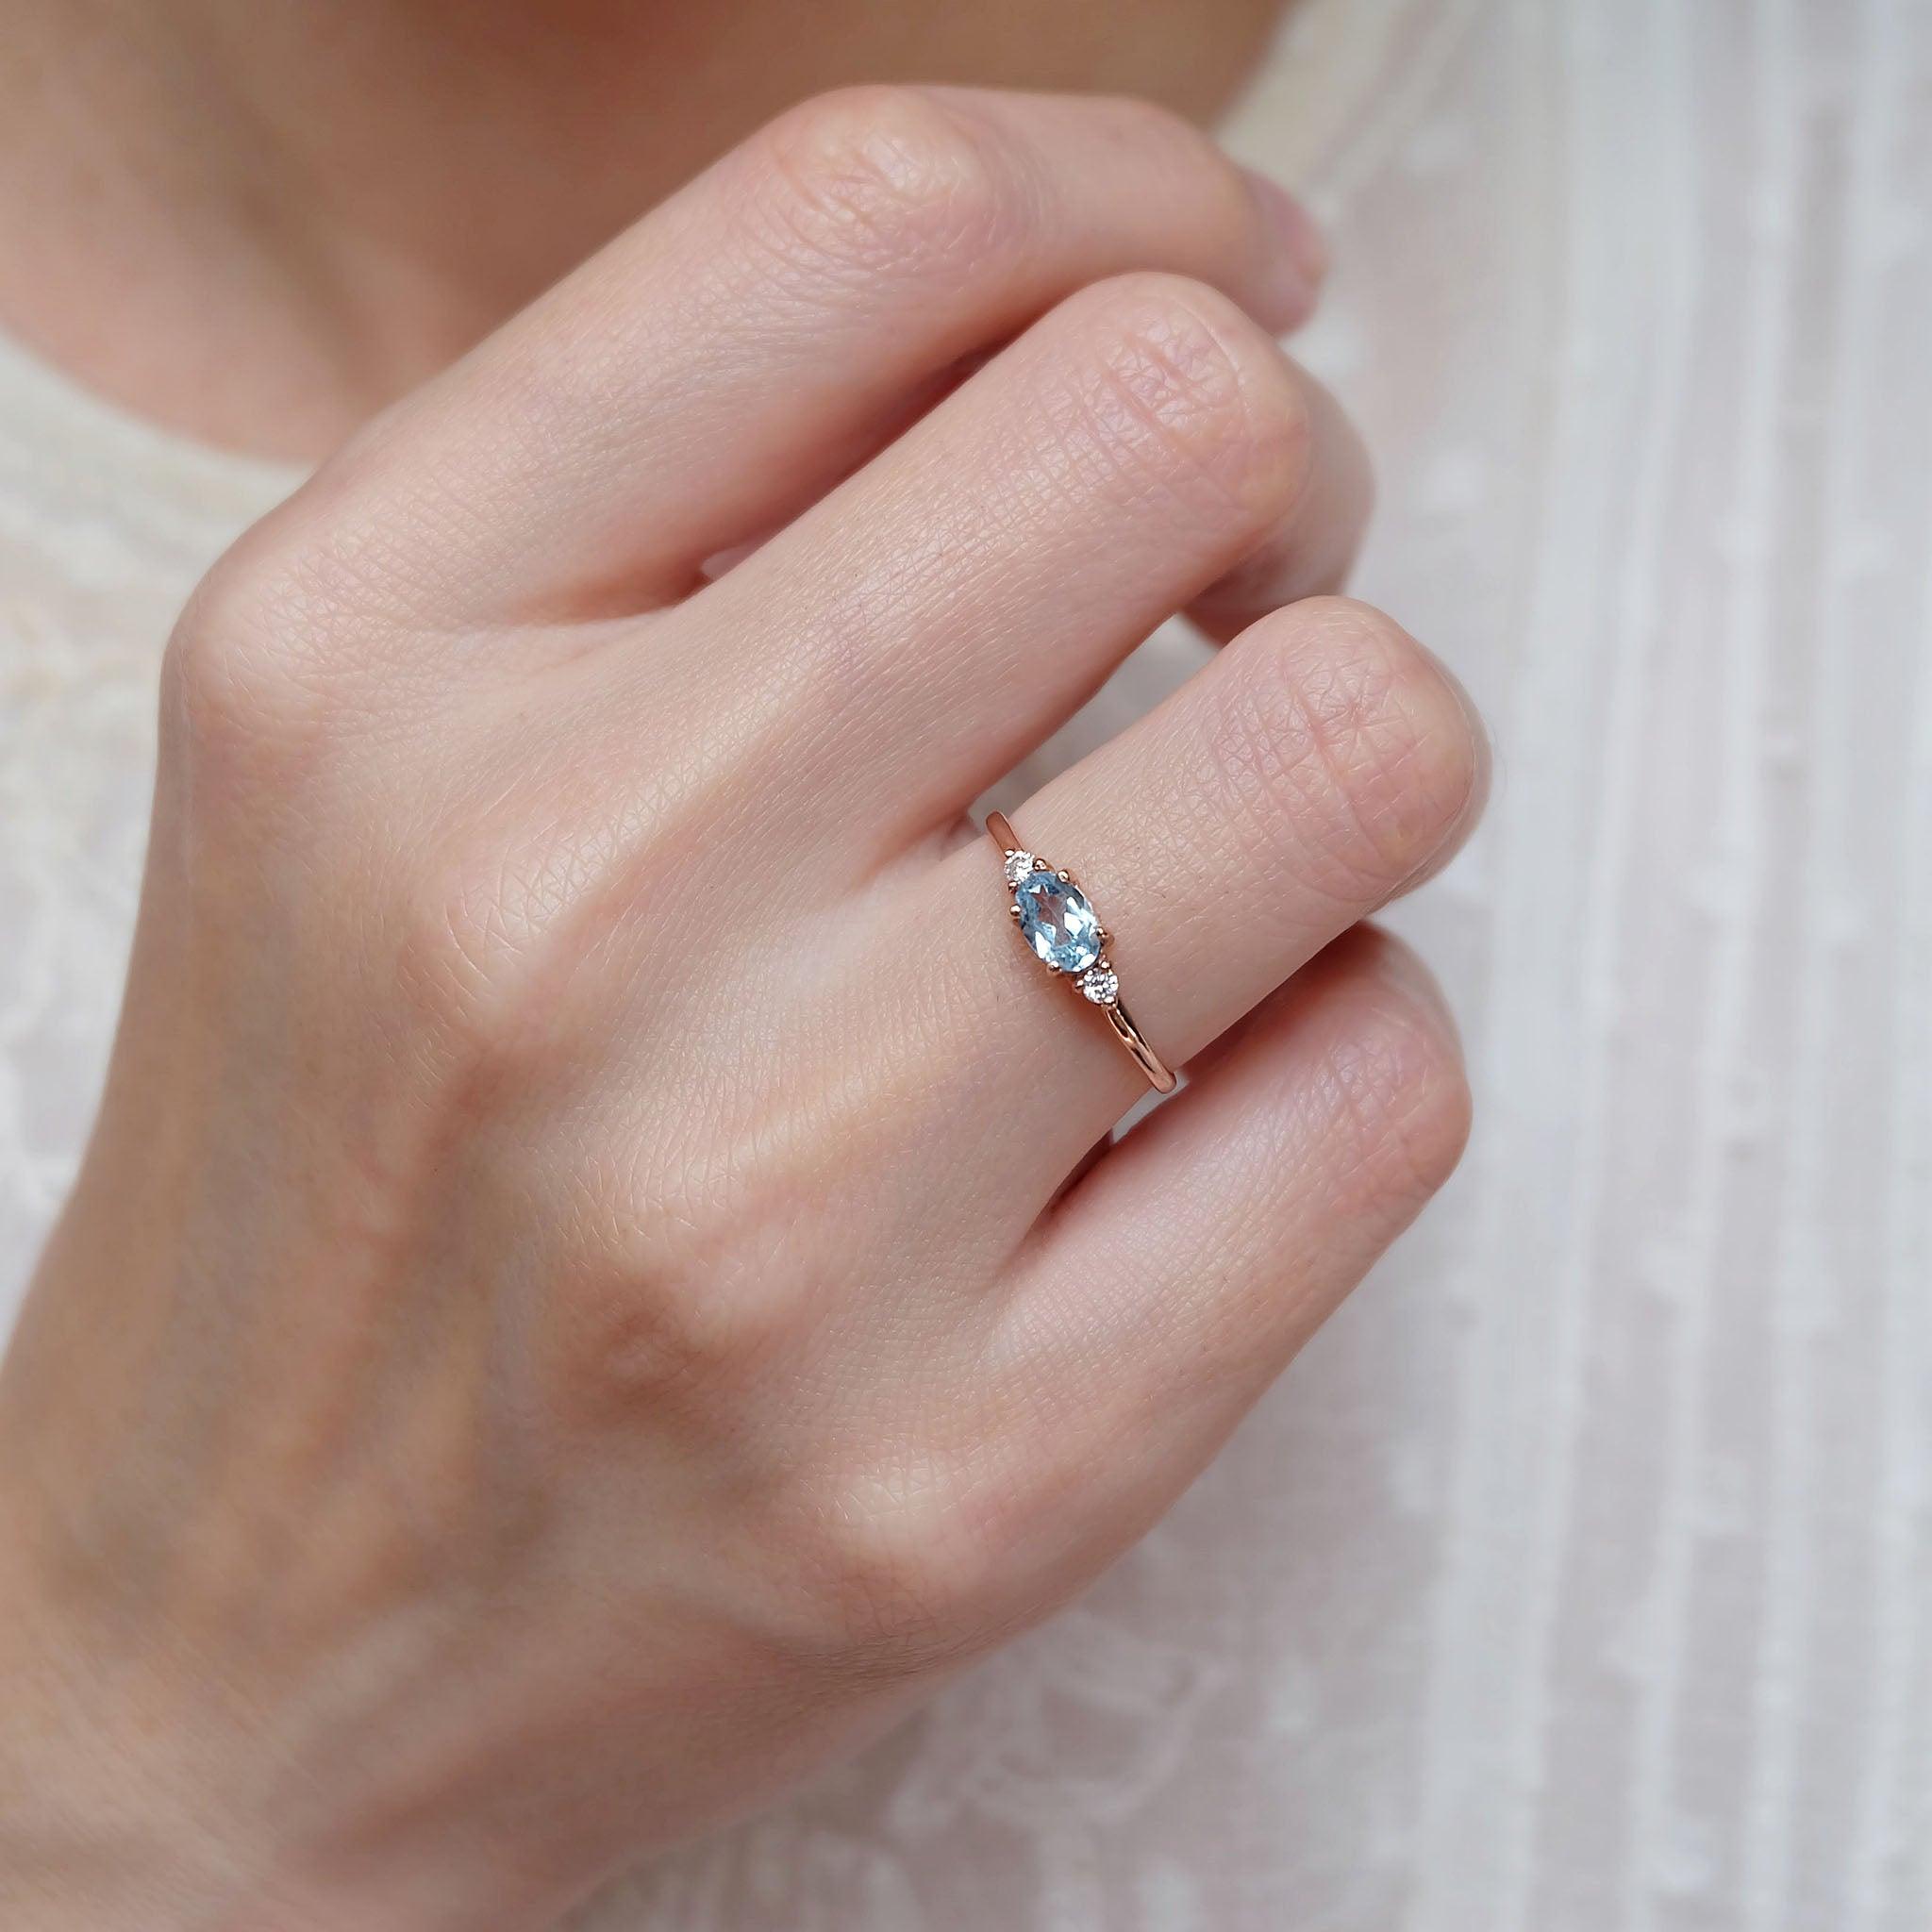 An aquamarine diamond ring worn on the right hand